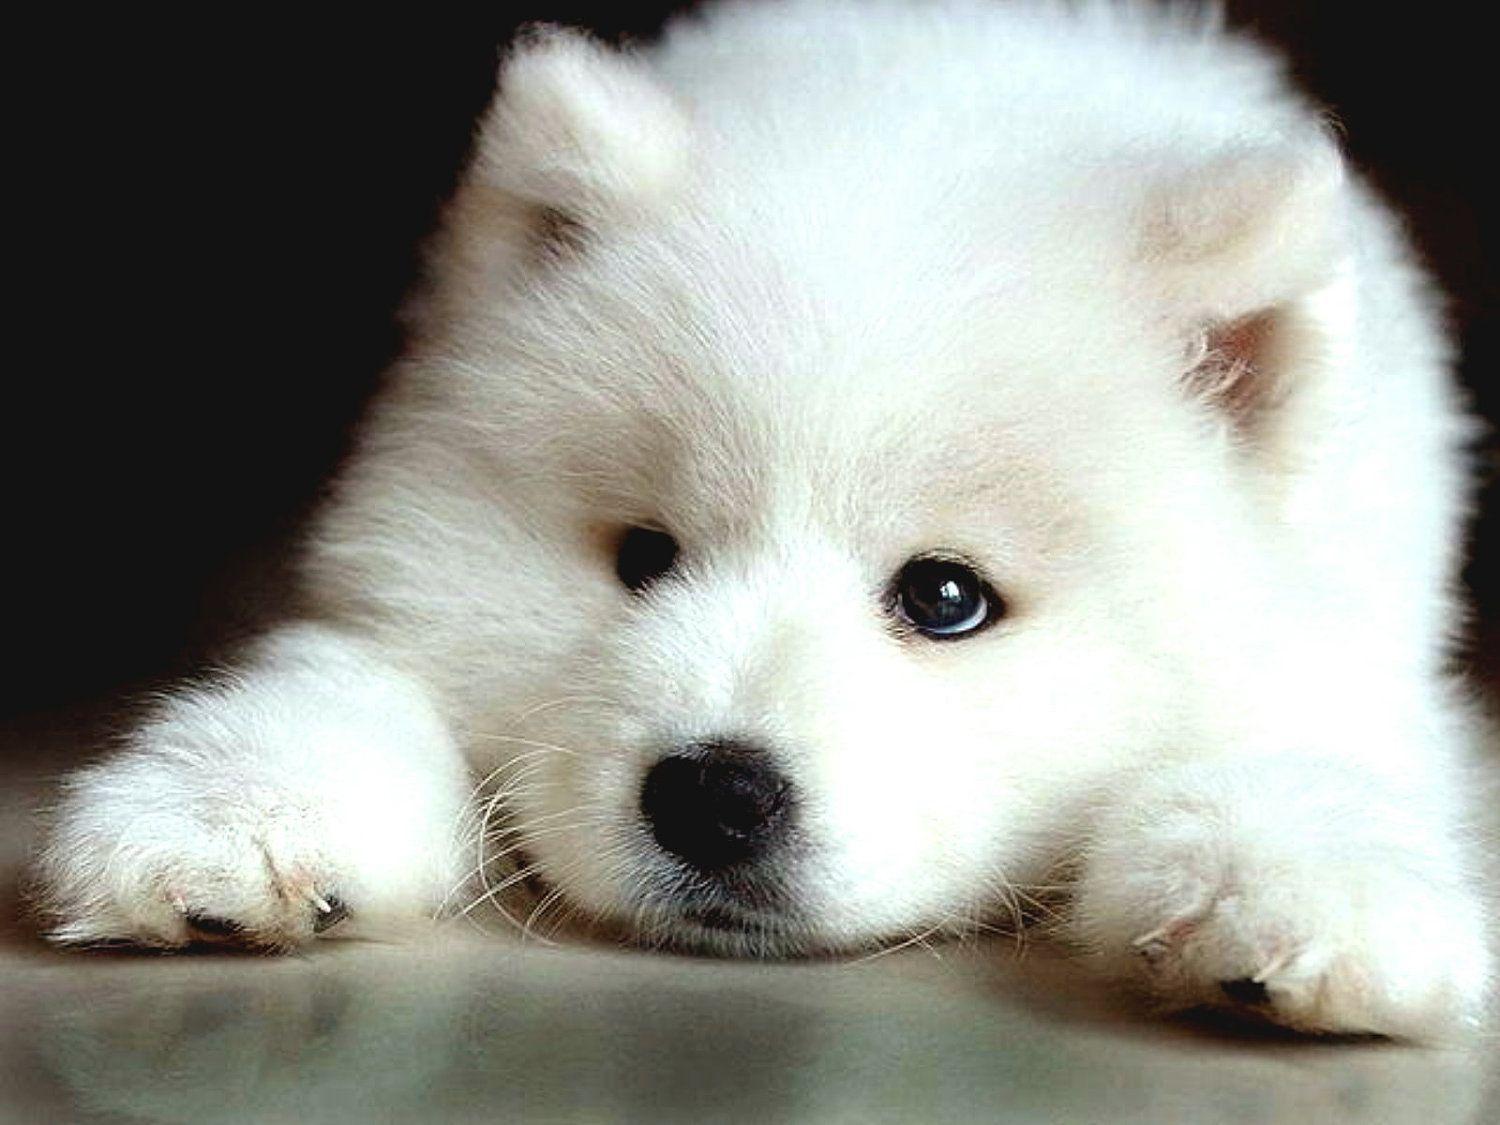 Sad Samoyed puppy photo and wallpaper. Beautiful Sad Samoyed puppy